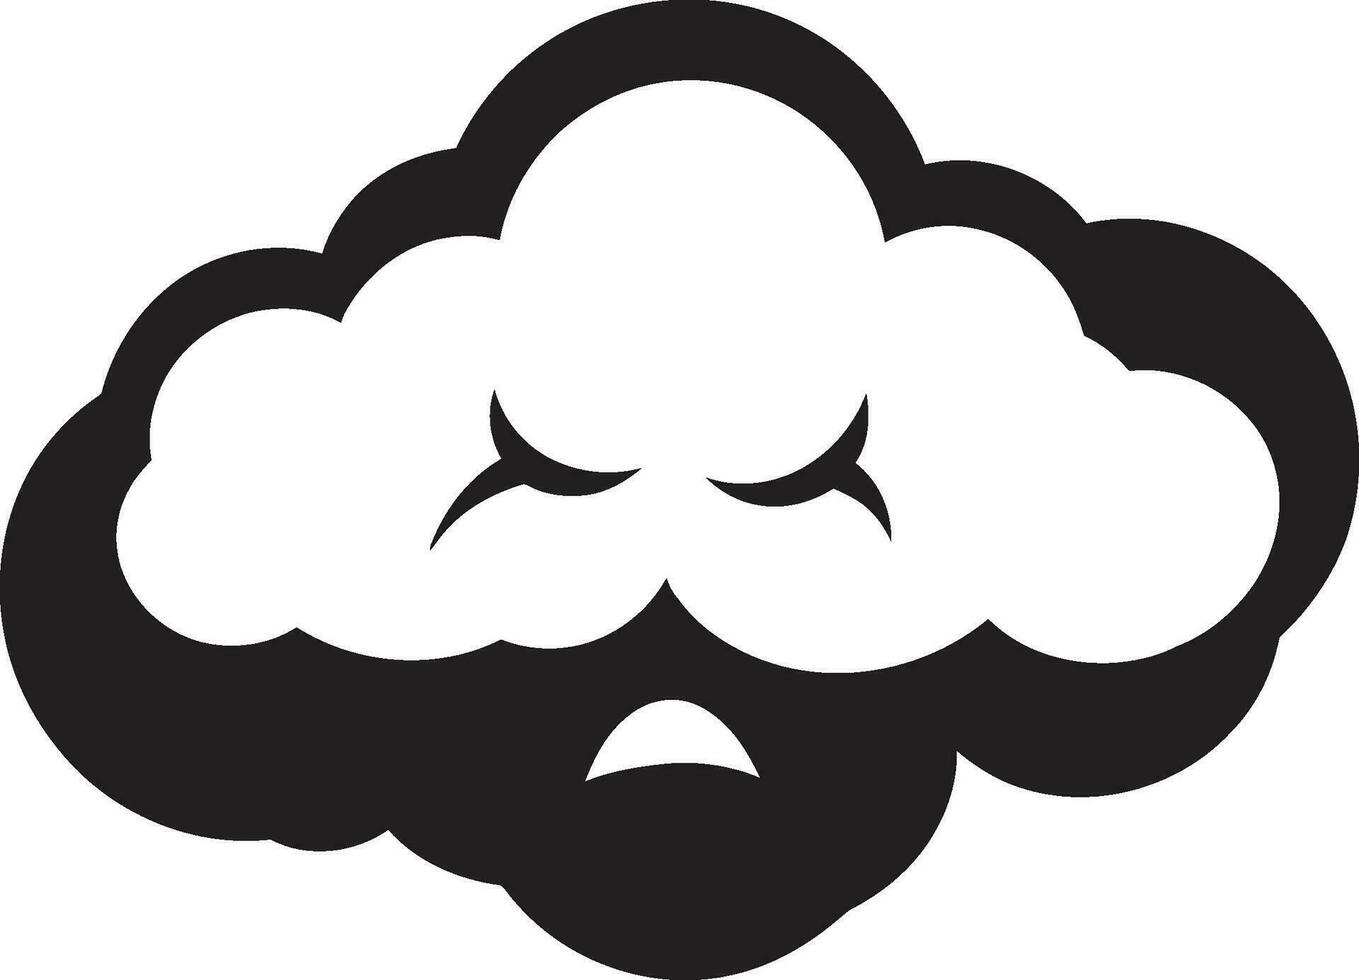 meditabondo burrasca cartone animato nube nero emblema fragoroso ira arrabbiato nube logo design vettore